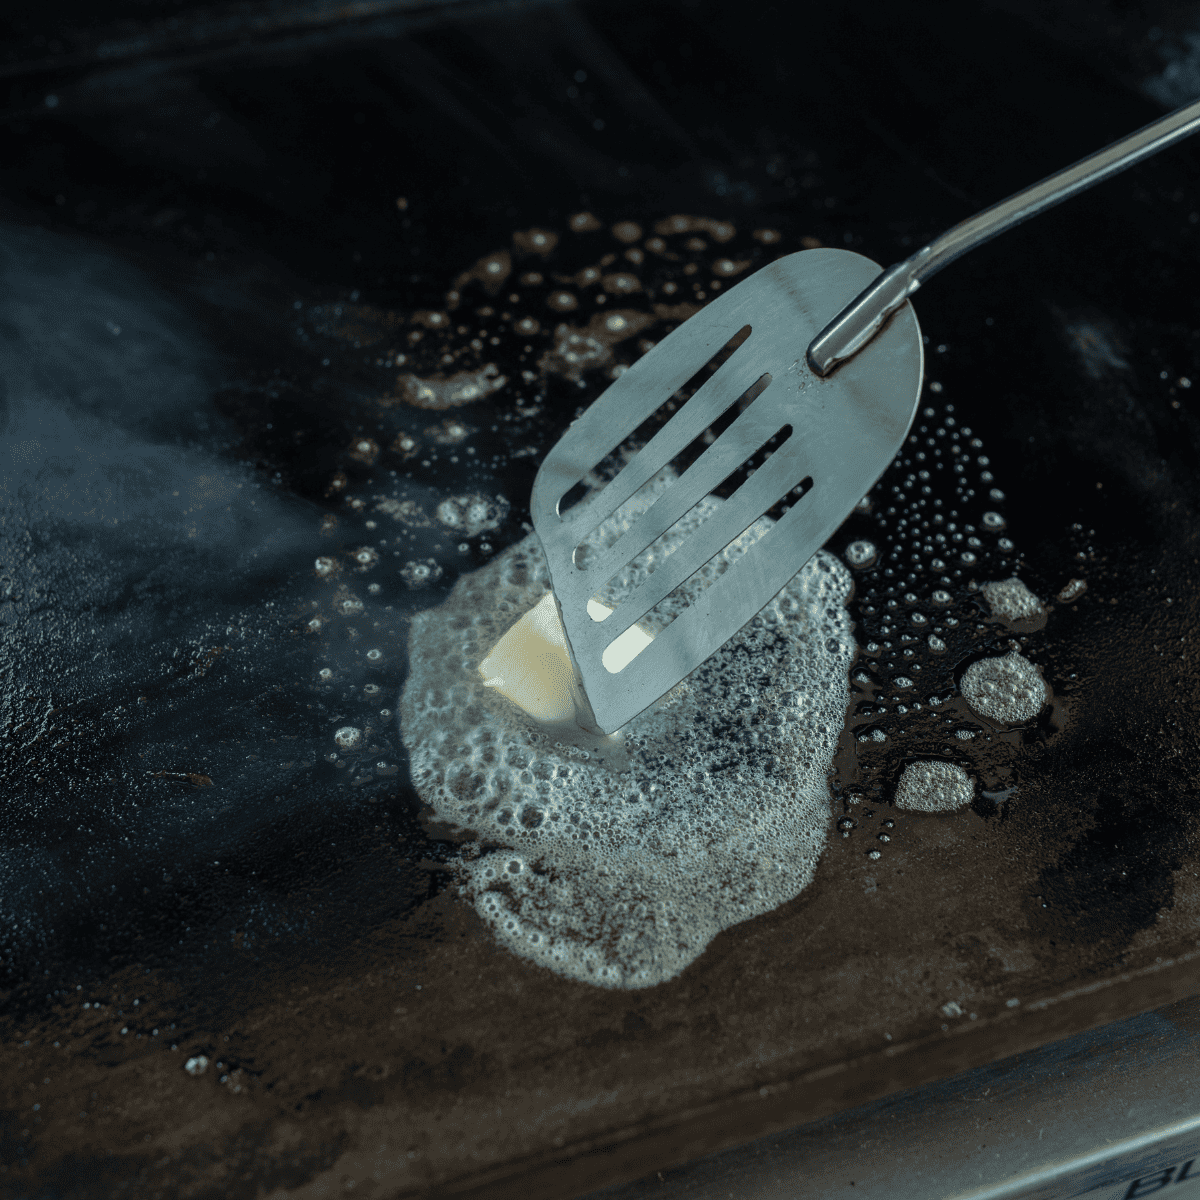 Blackstone Fried Eggs Recipe - Fork To Spoon